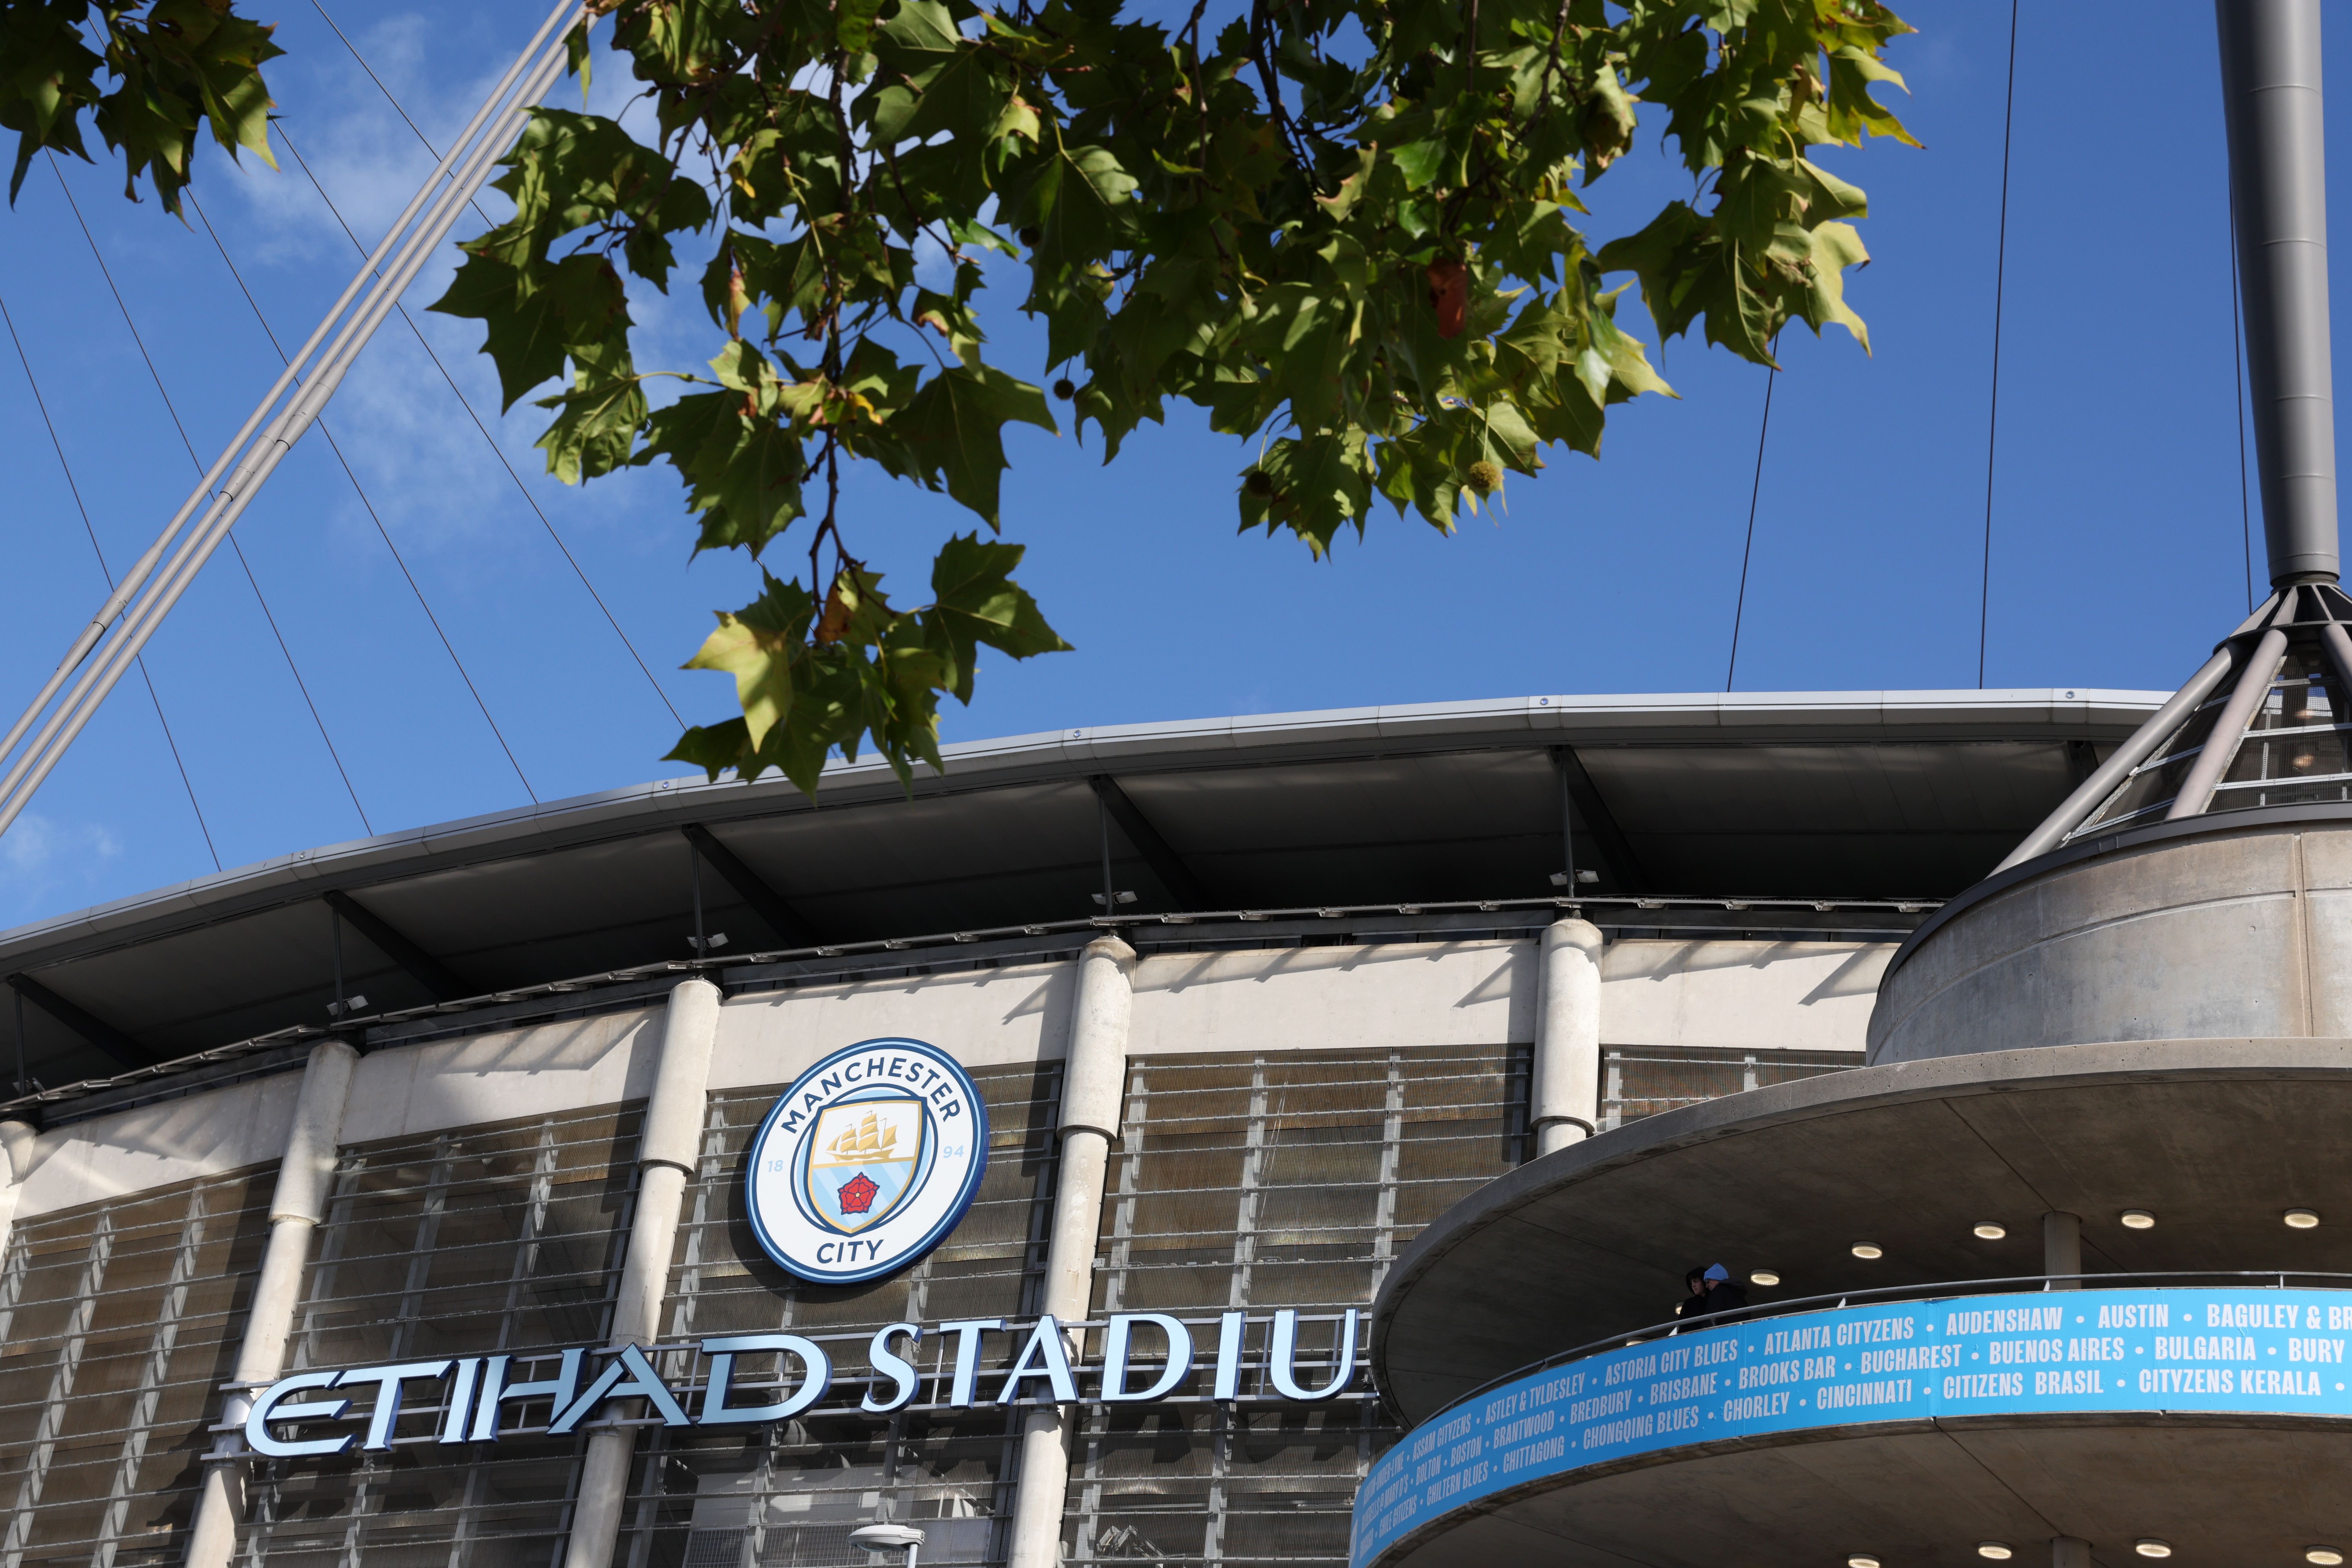 Manchester City's home stadium